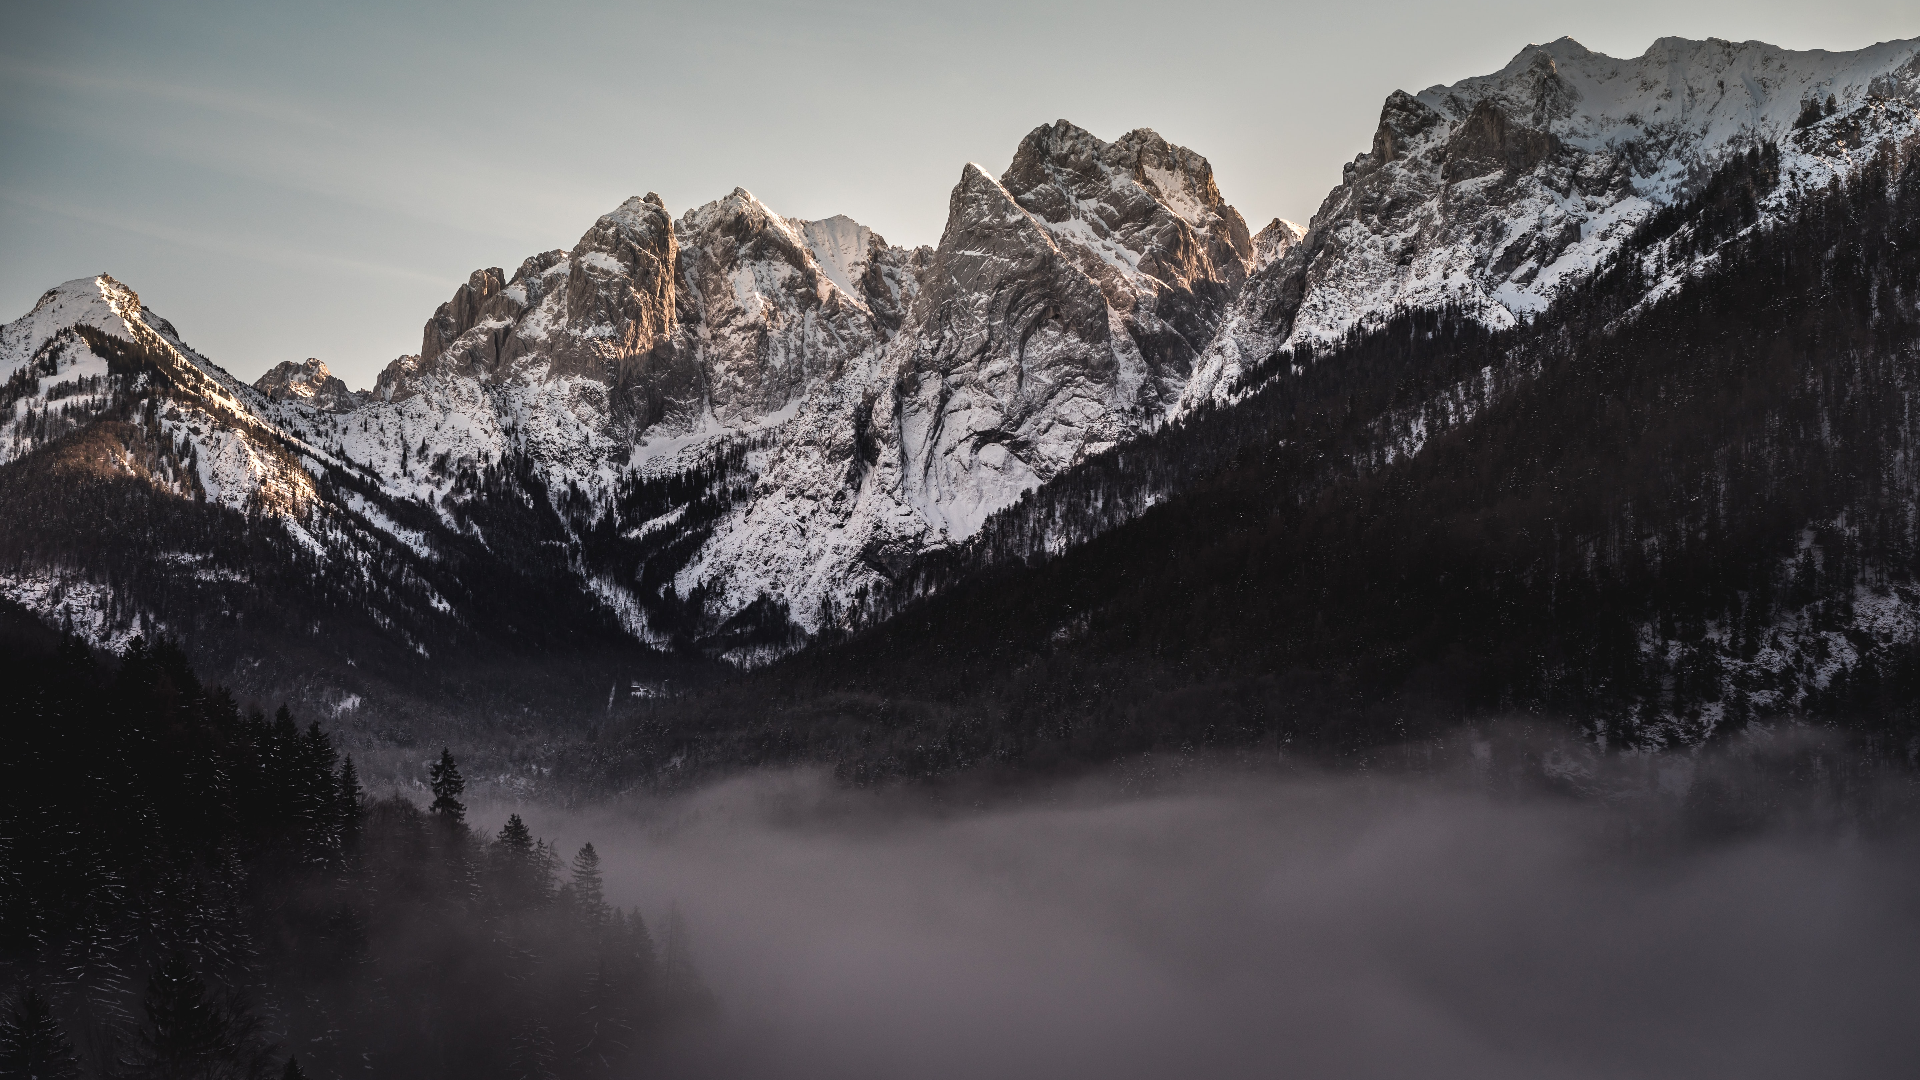 General 1920x1080 nature landscape trees forest dark mist mountains snowy mountain clouds sky sunlight Tyrol Austria